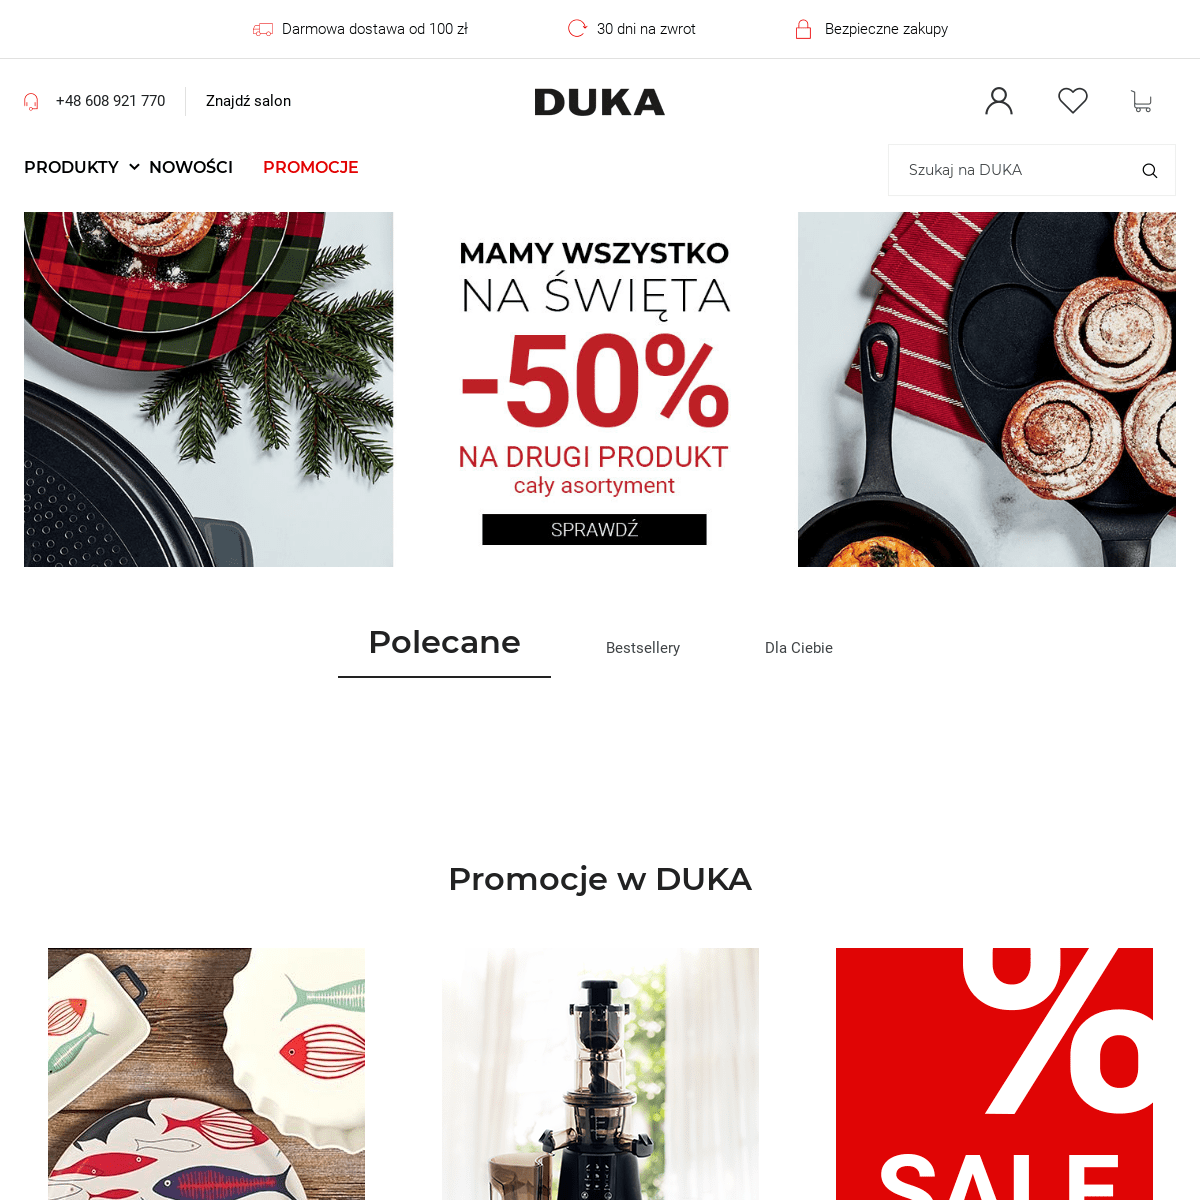 A complete backup of duka.com